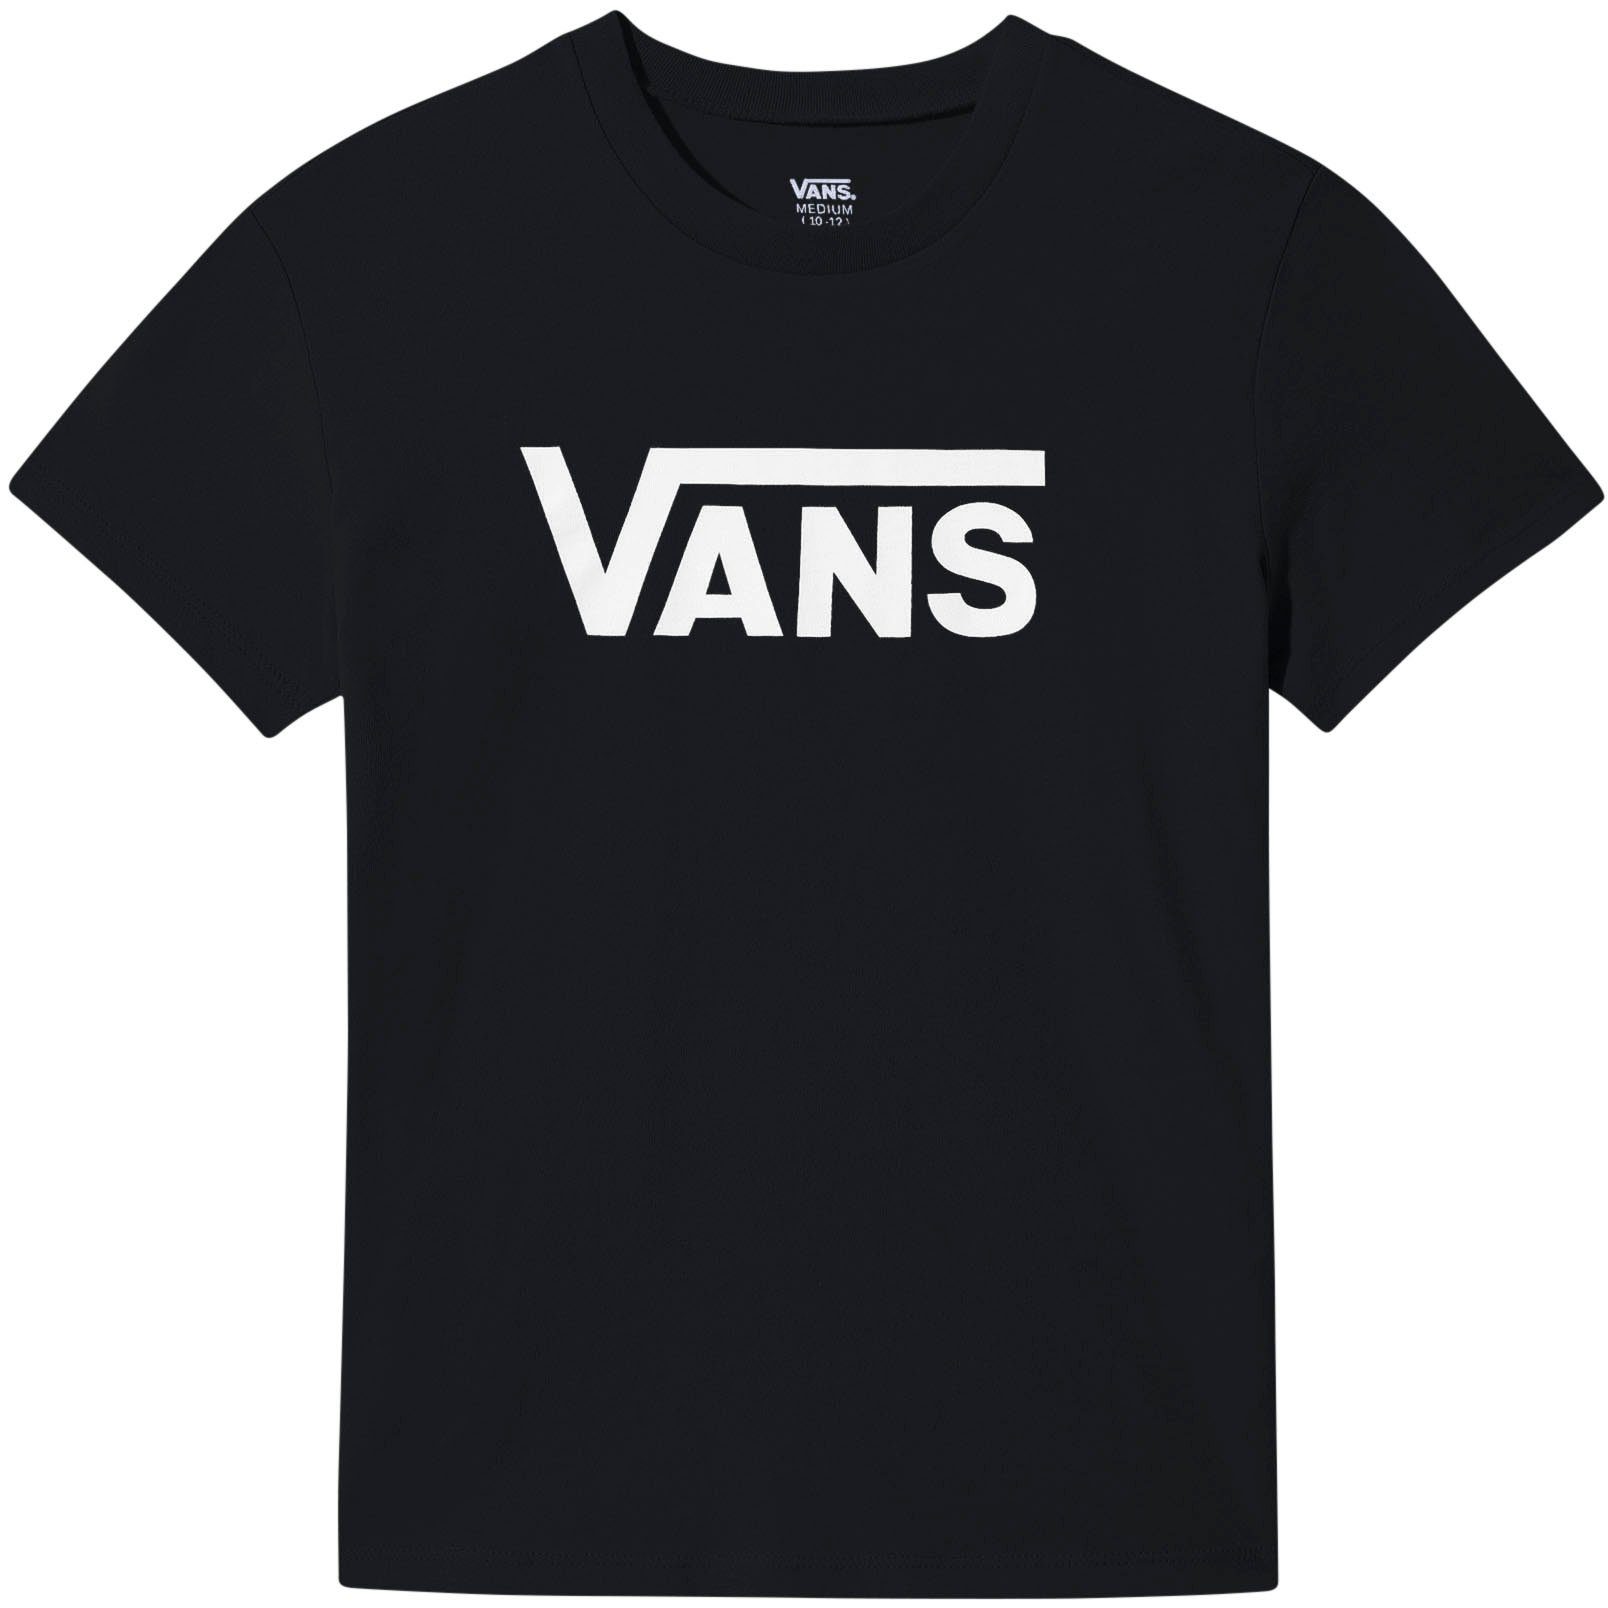 GIRLS" Vans V T-Shirt FLYING CREW schwarz-weiß